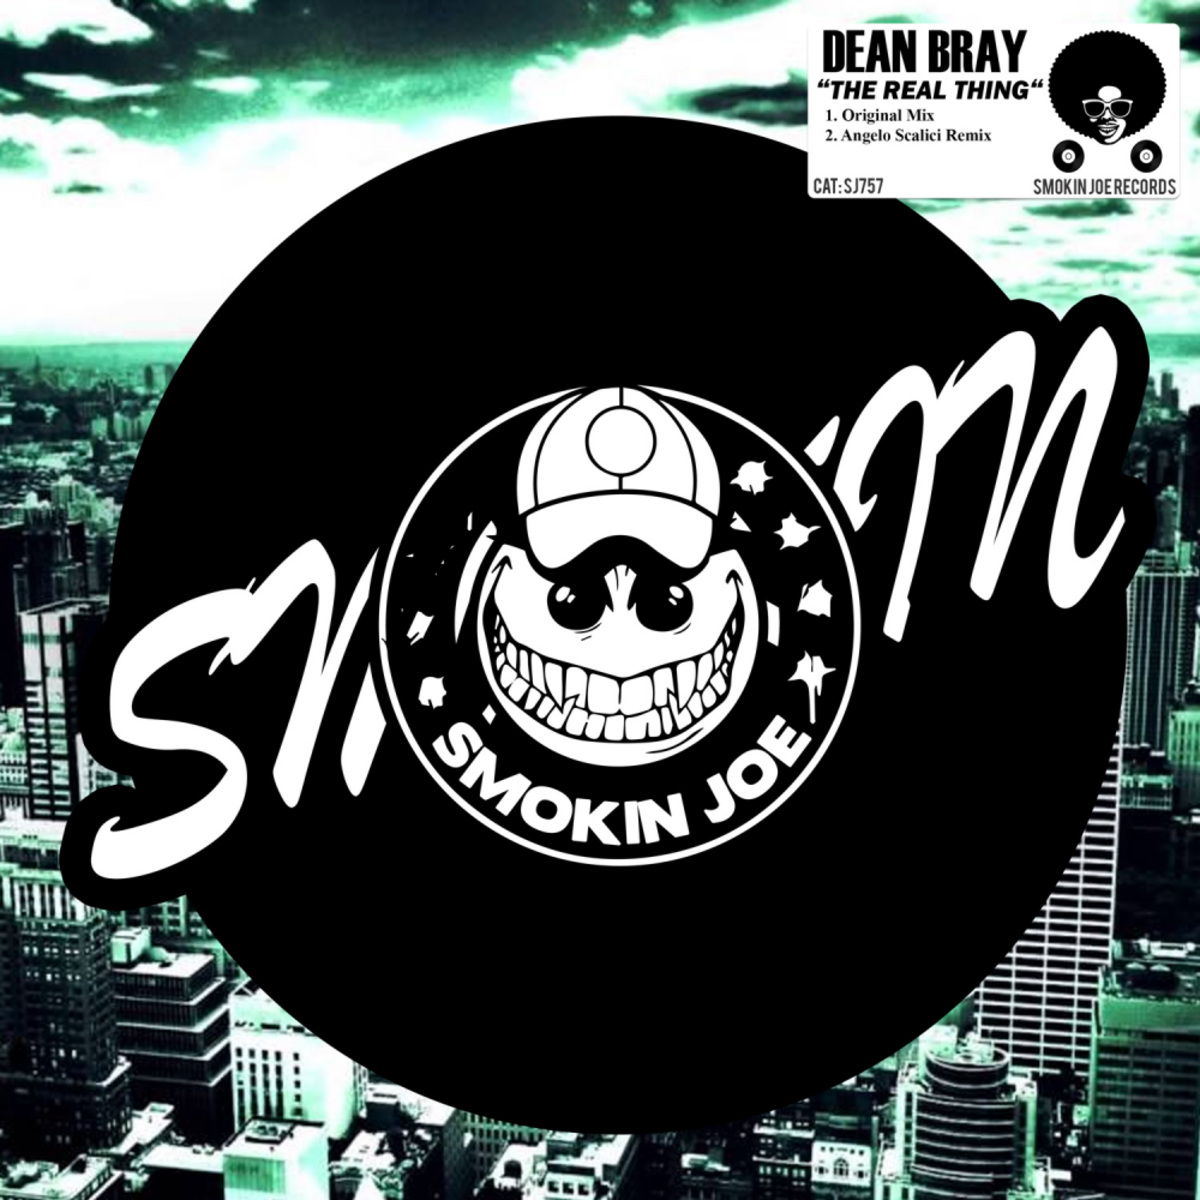 Dean Bray - The Real Thing / Smokin Joe Records